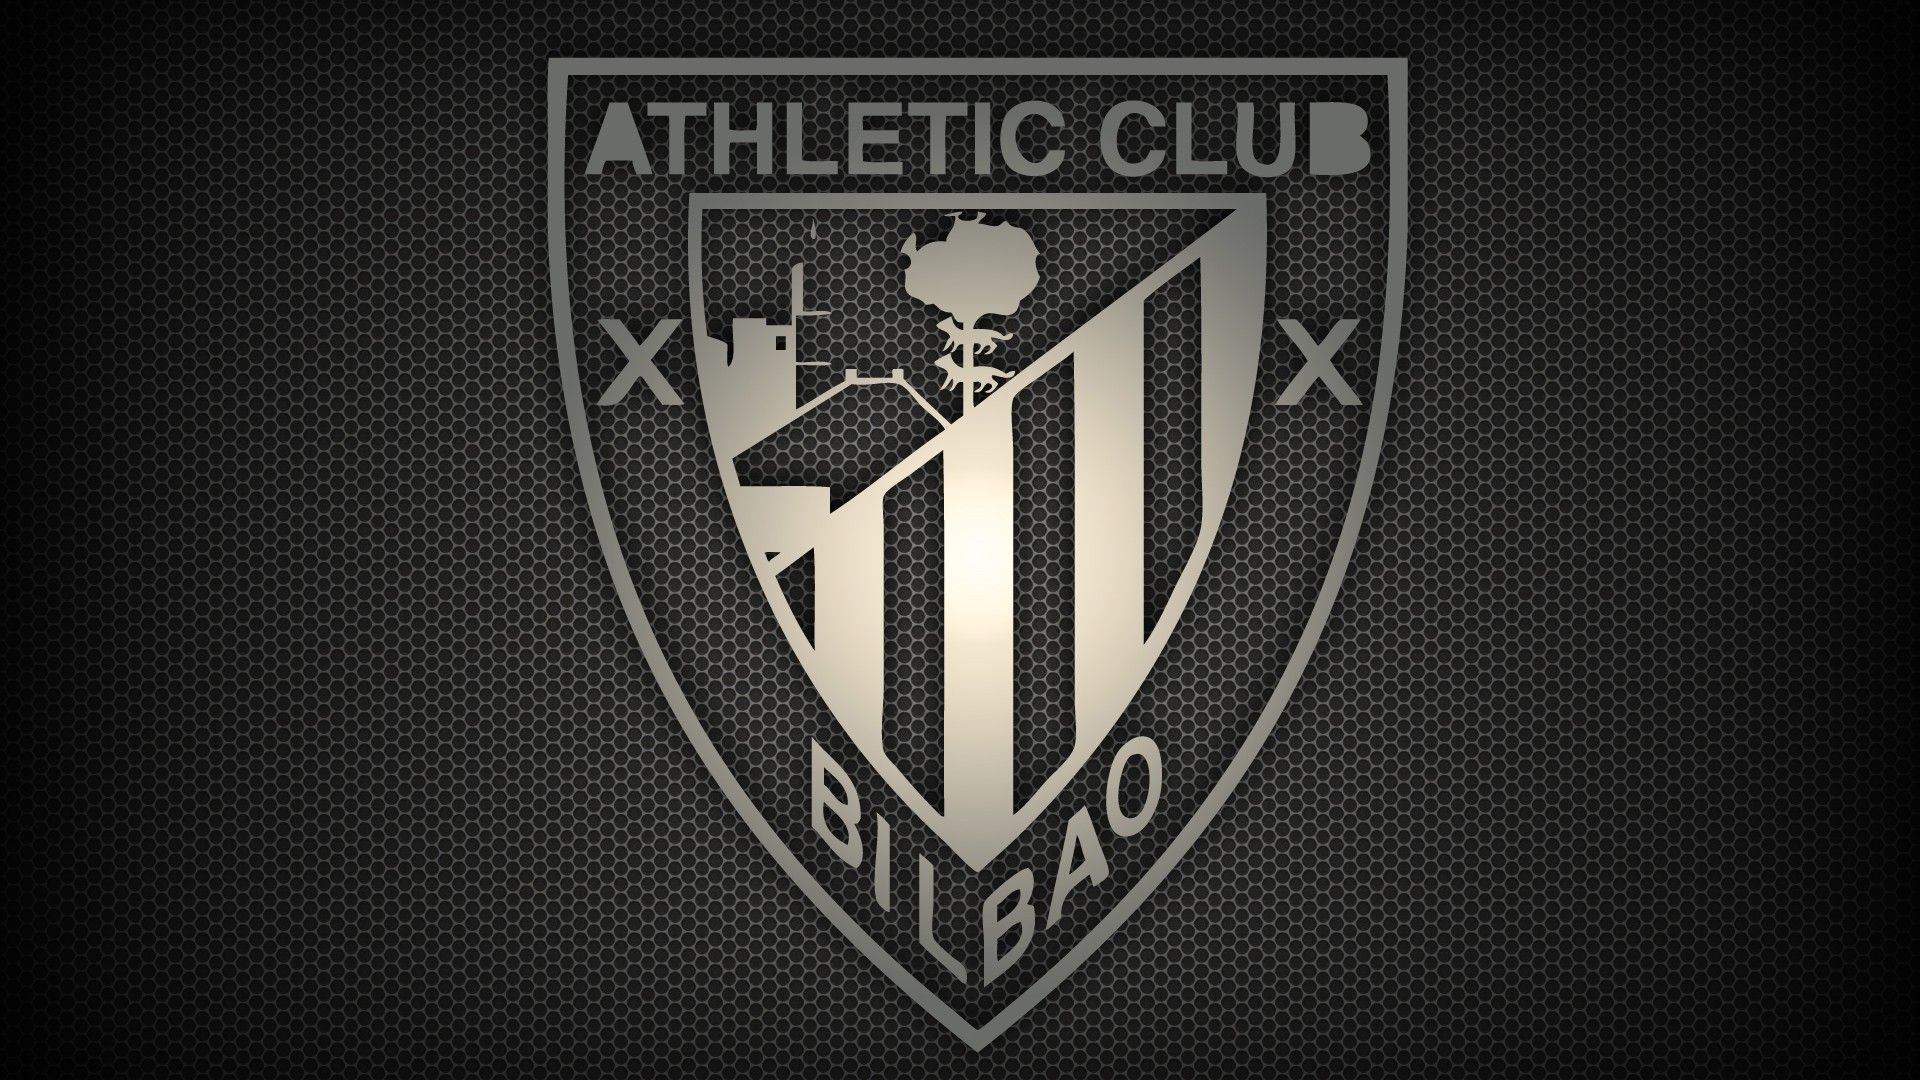 Sports soccer logos football teams Football Logos Athletic Bilbao ...